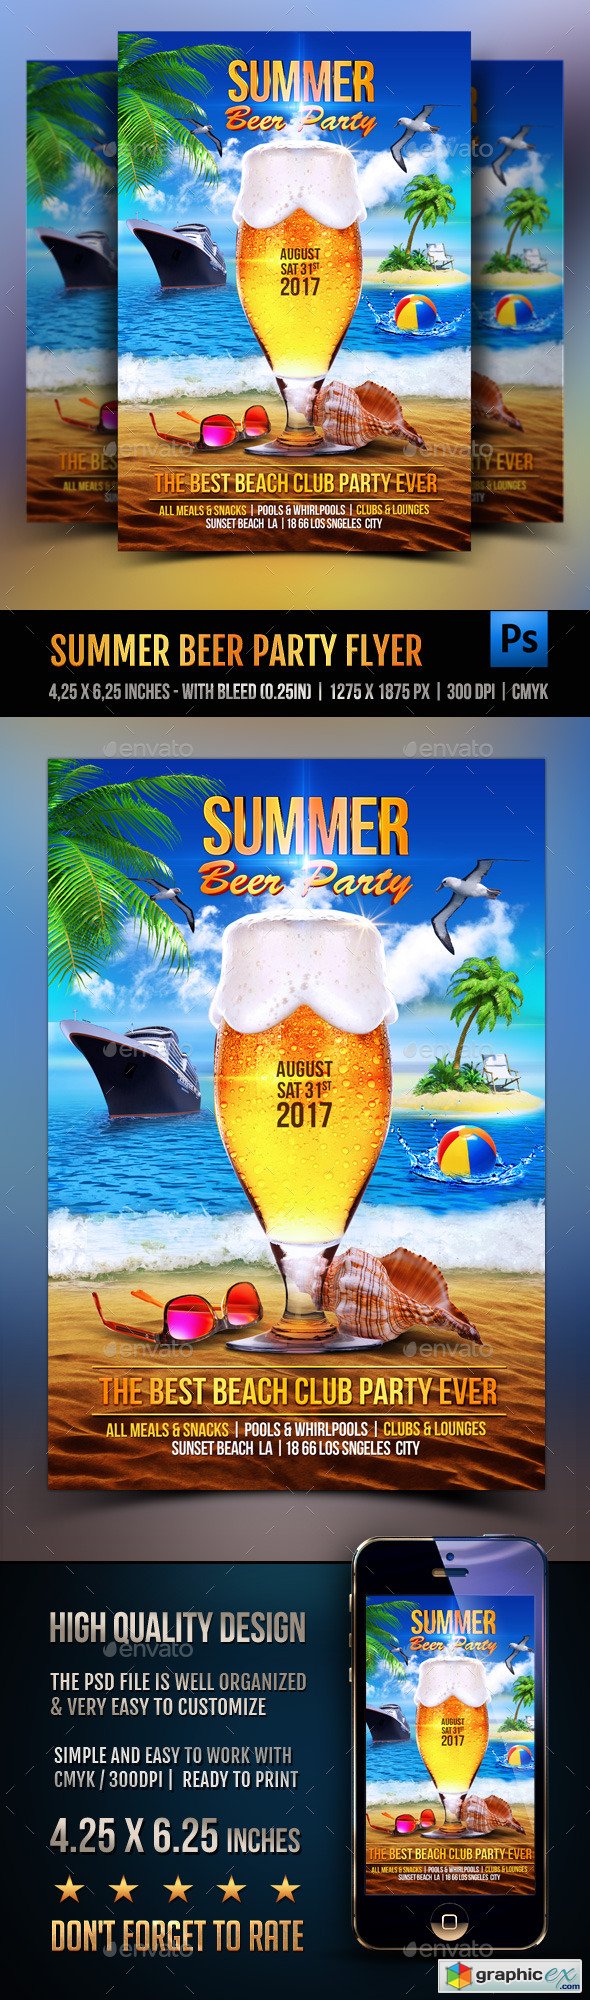 Summer Beer Party Flyer